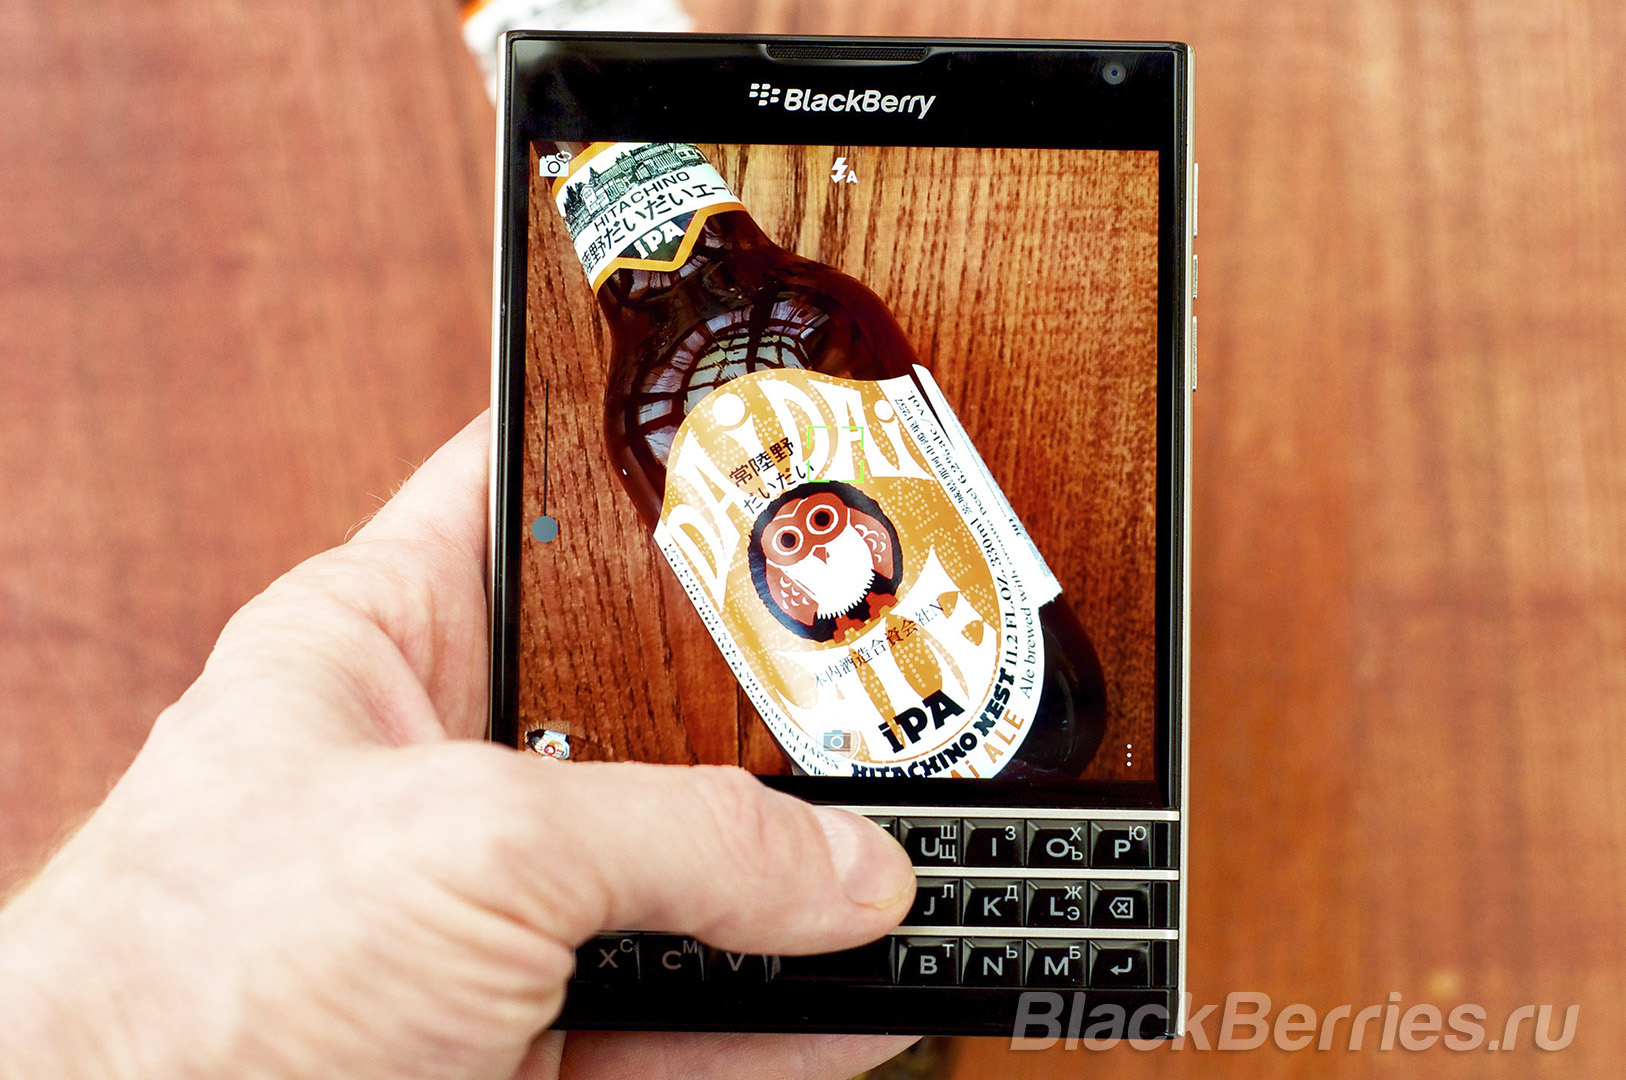 BlackBerry-Passport-Silver-Apps-16-08-7